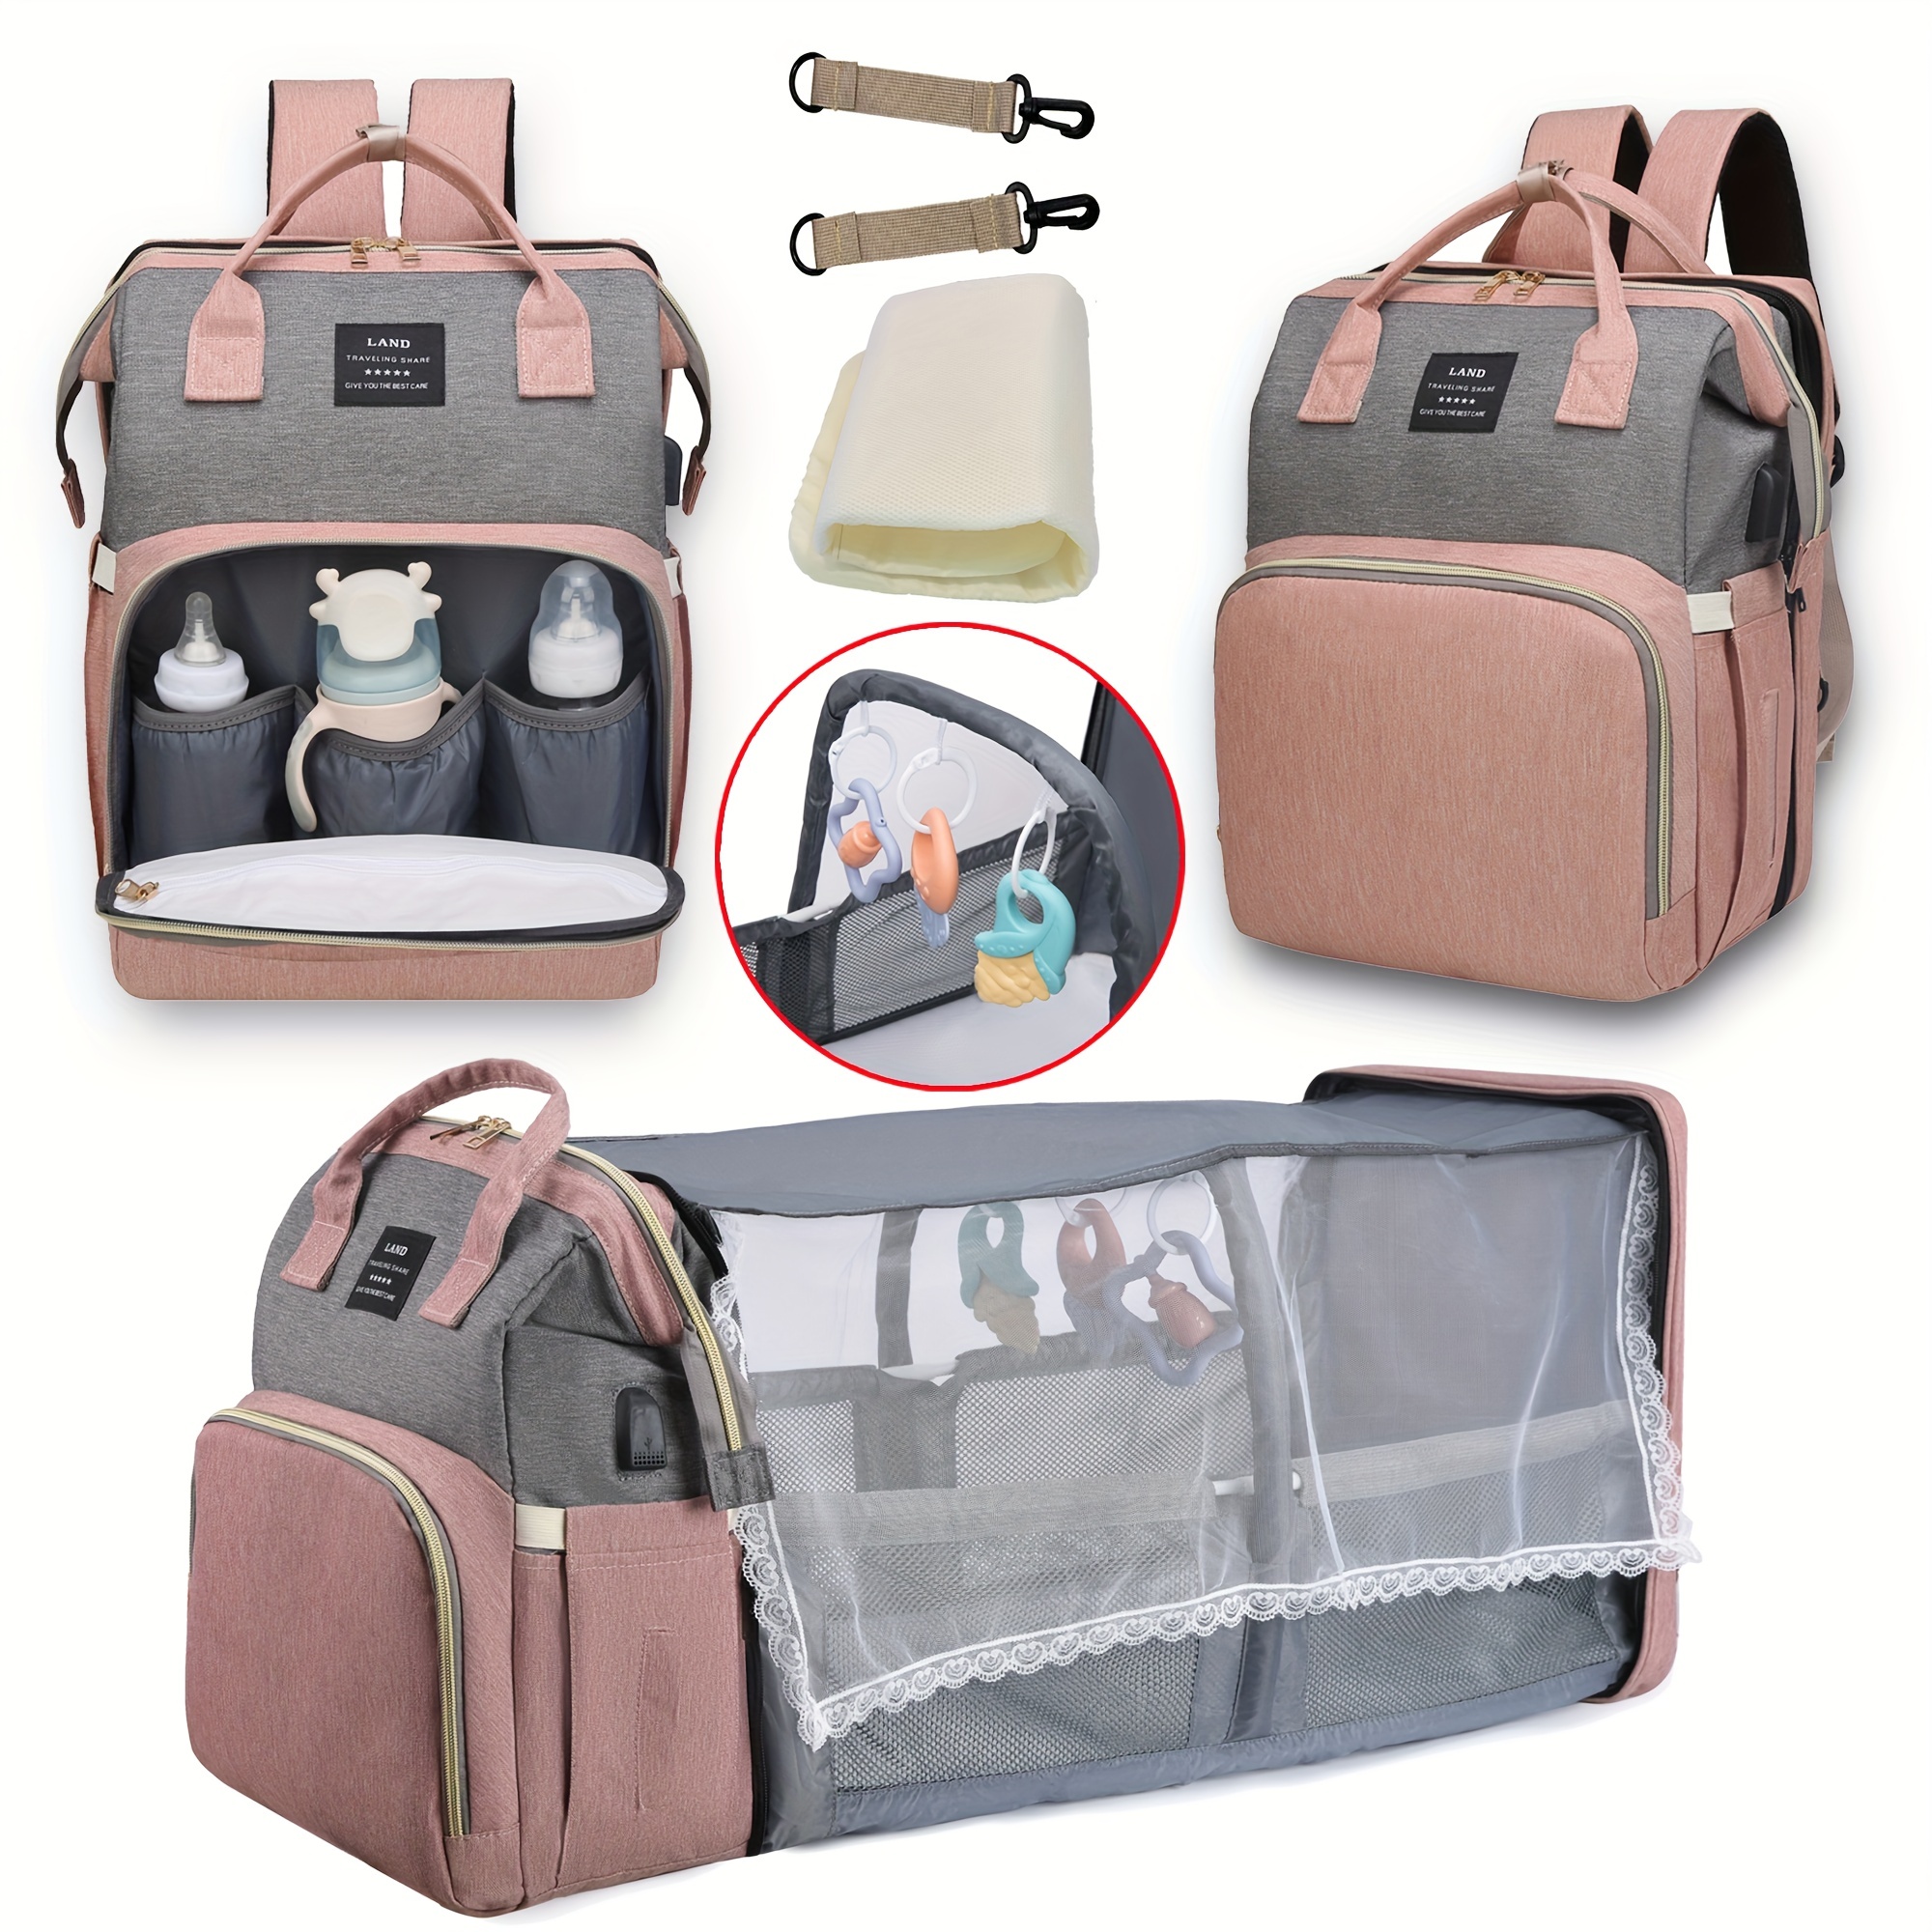 Newborn Baby Diaper Bag For baby & Accessories - Multi-Color